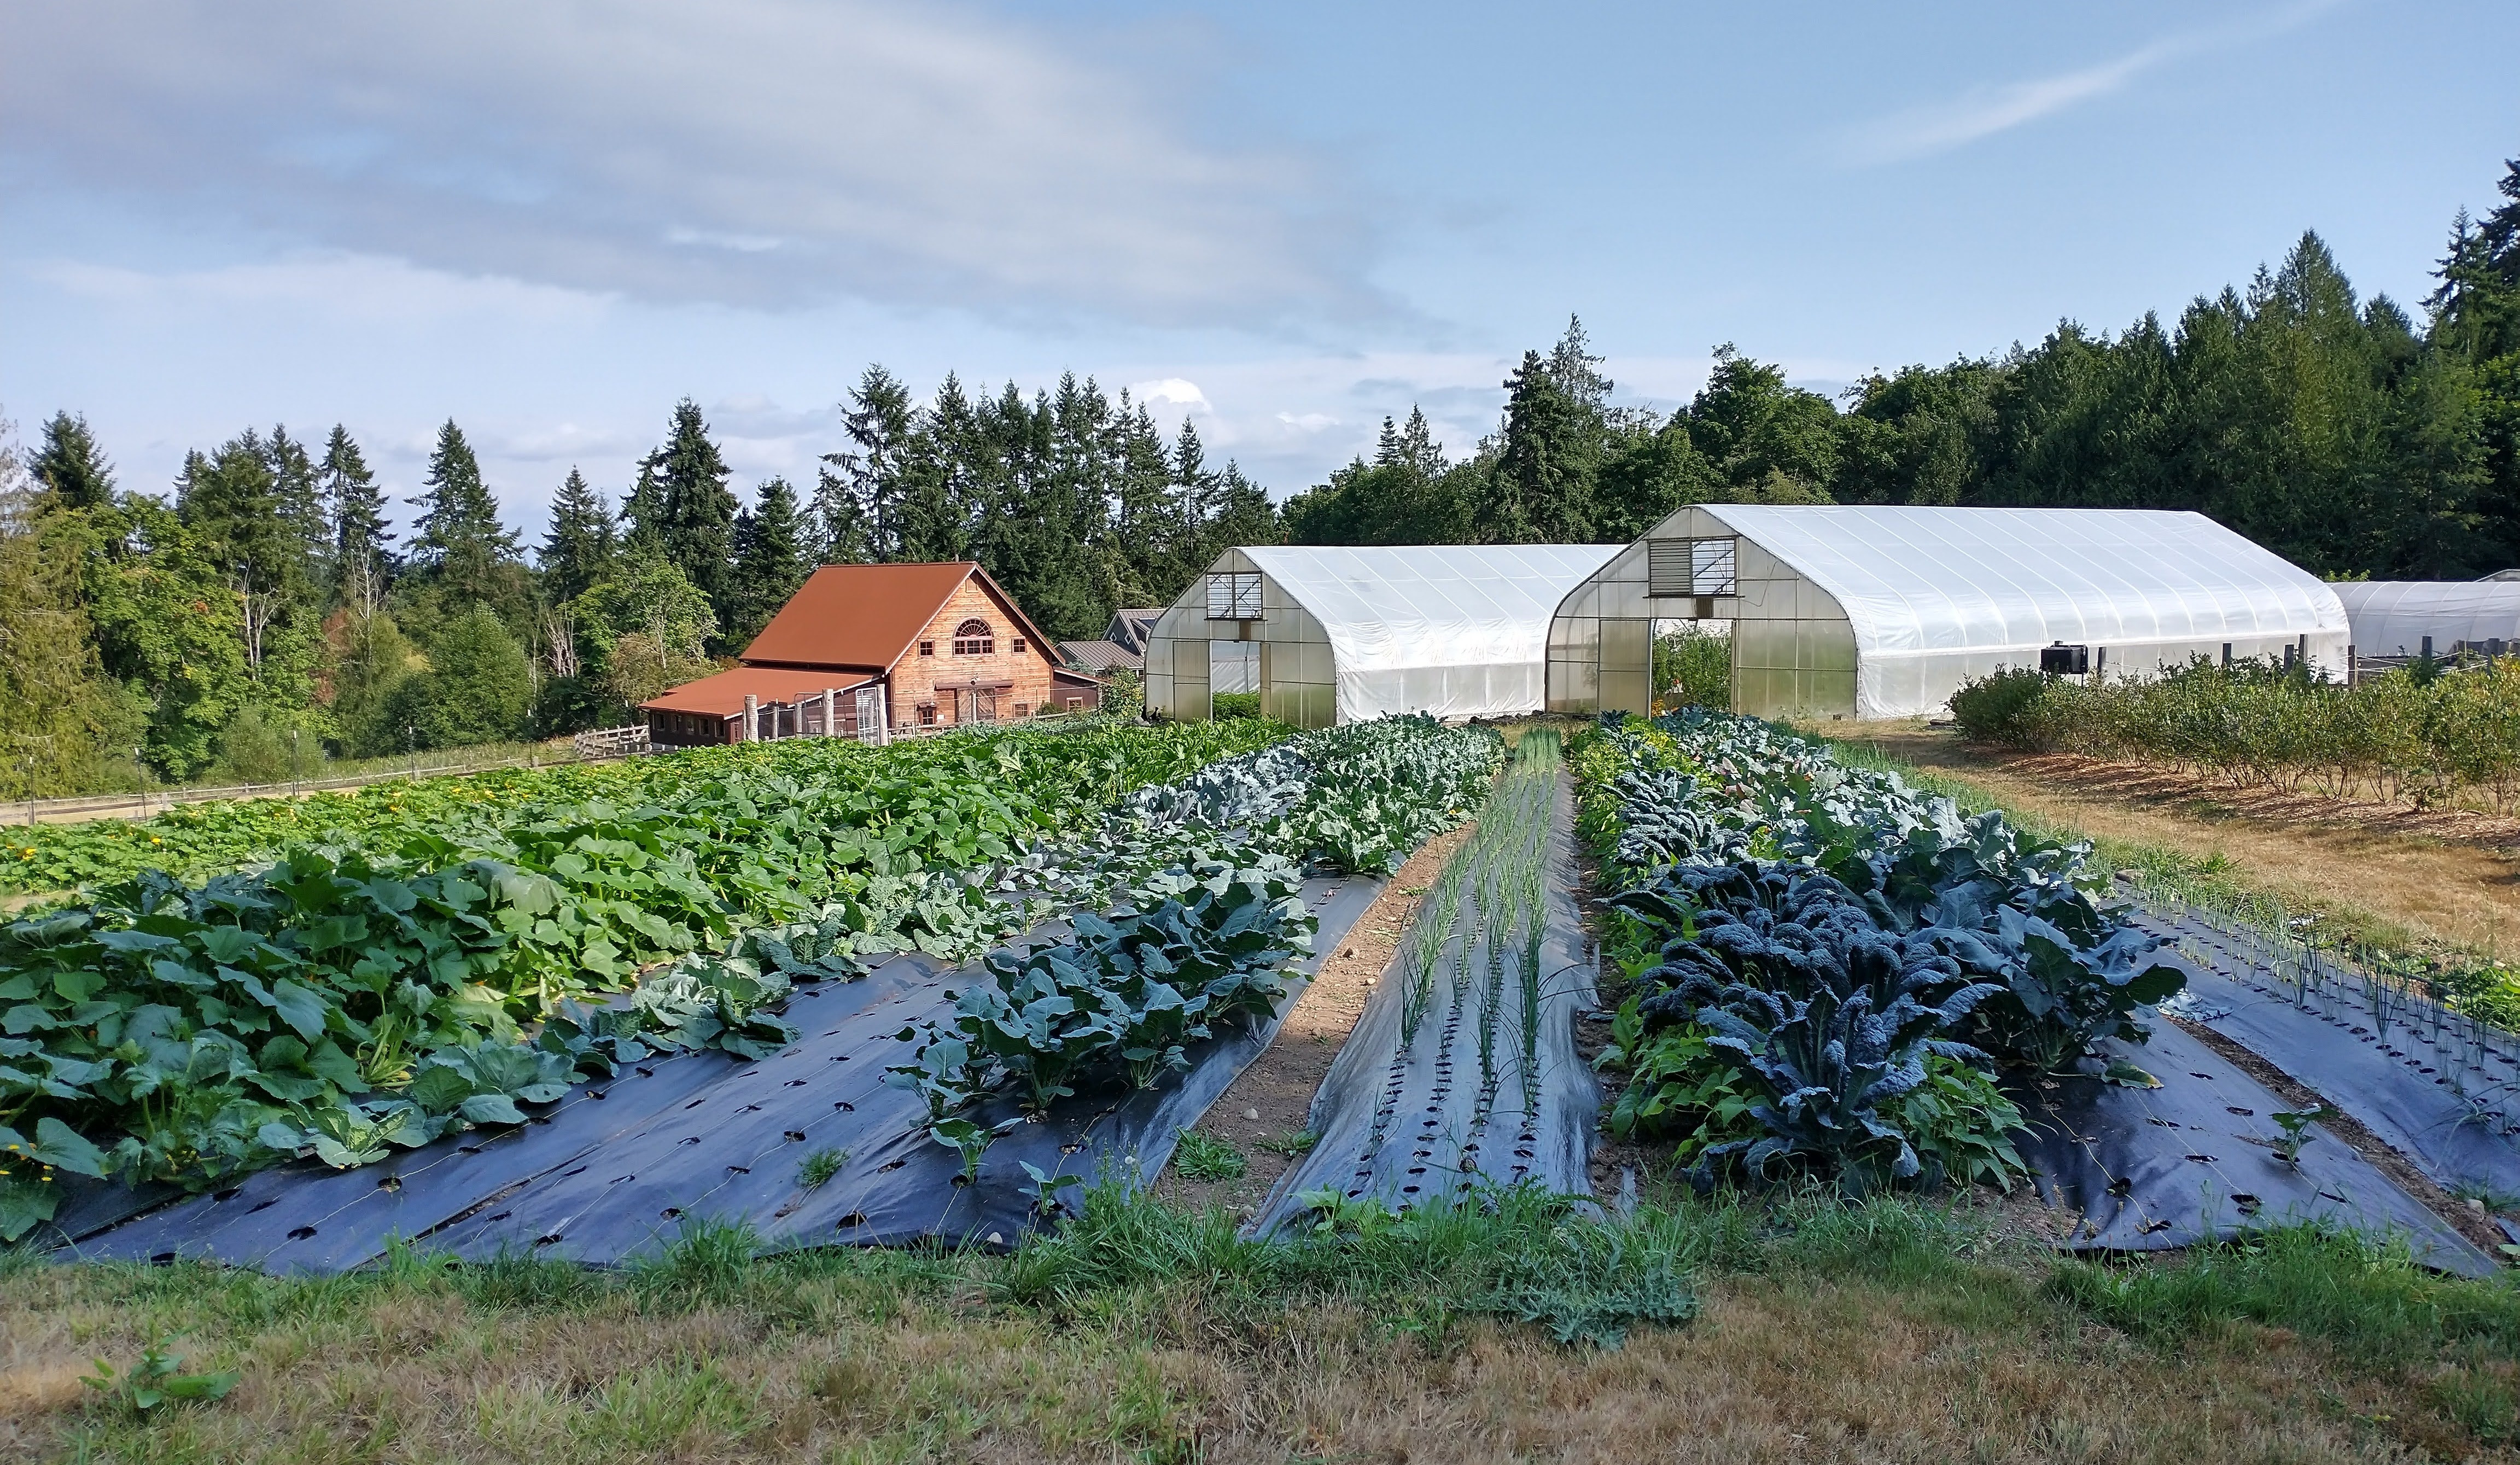 Upper Fields and Greenhouses @ Heyday Farm. Uploaded by Heyday Farm